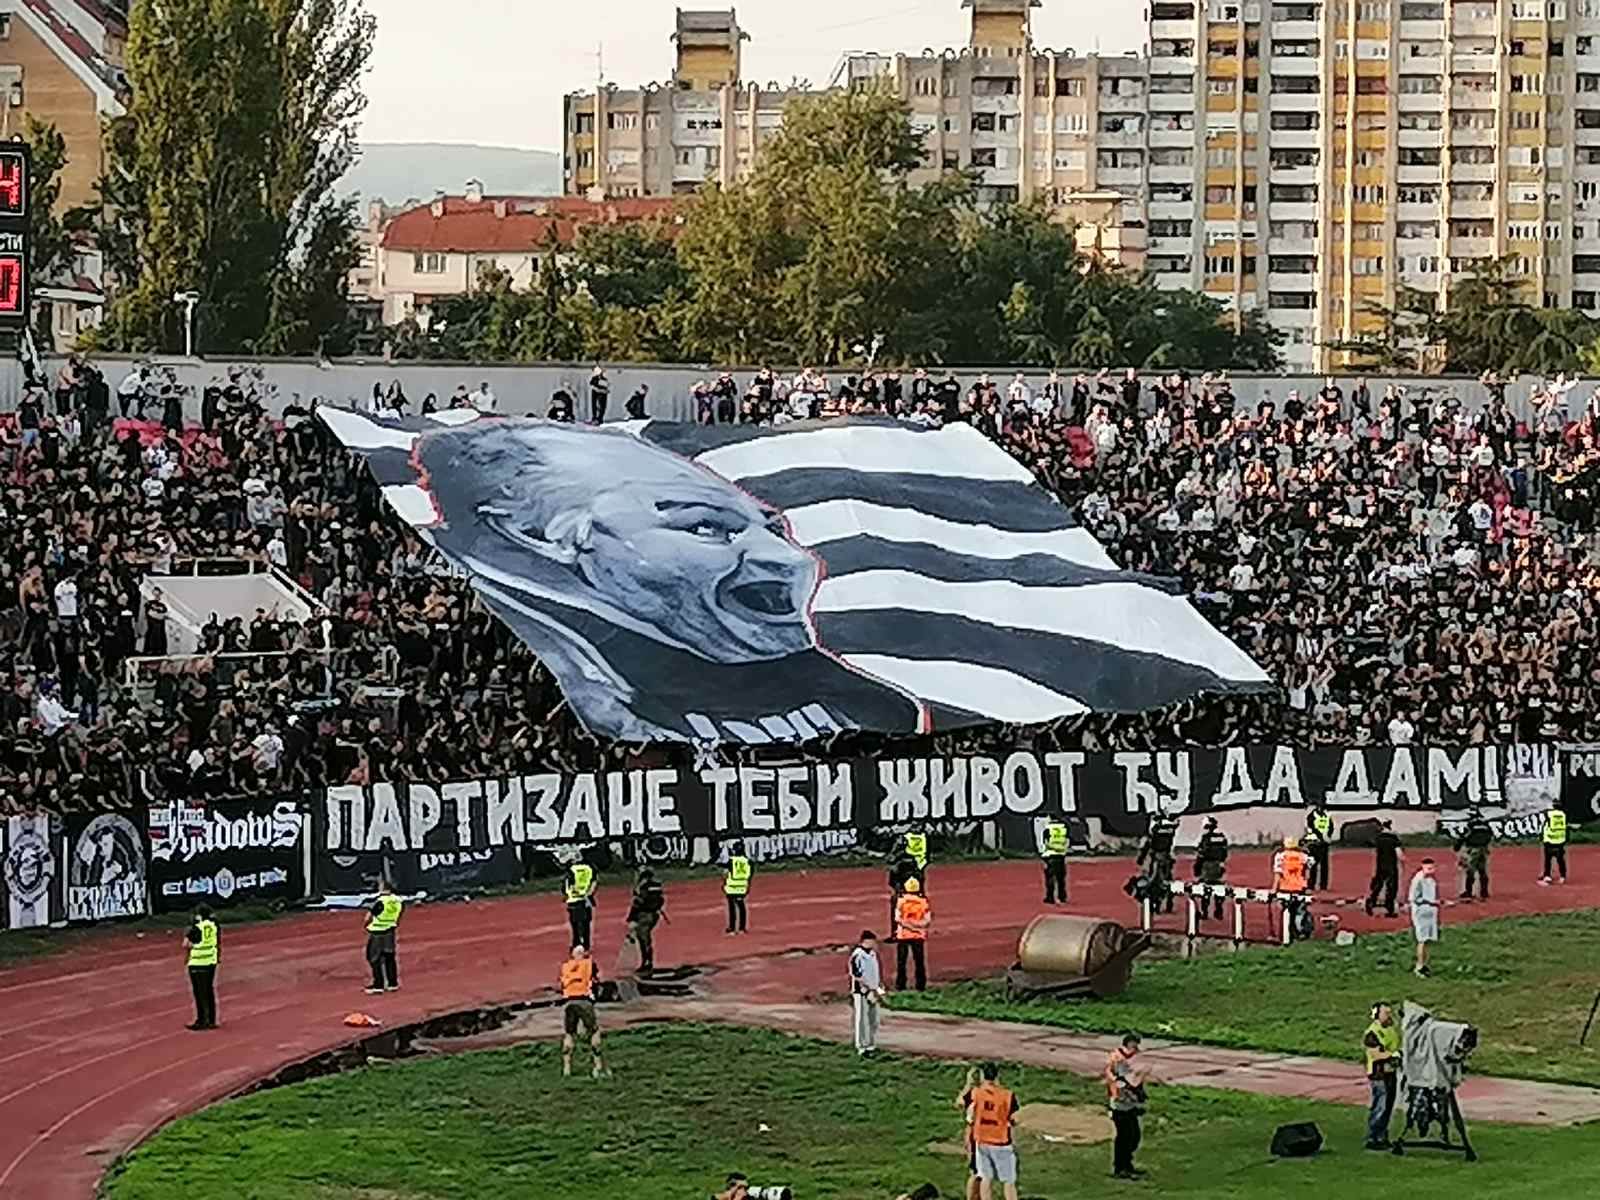 Vojvodina - Partizan UŽIVO finale Kup Srbije 2020 prenos Arena Sport i B92 livestream rezultat 